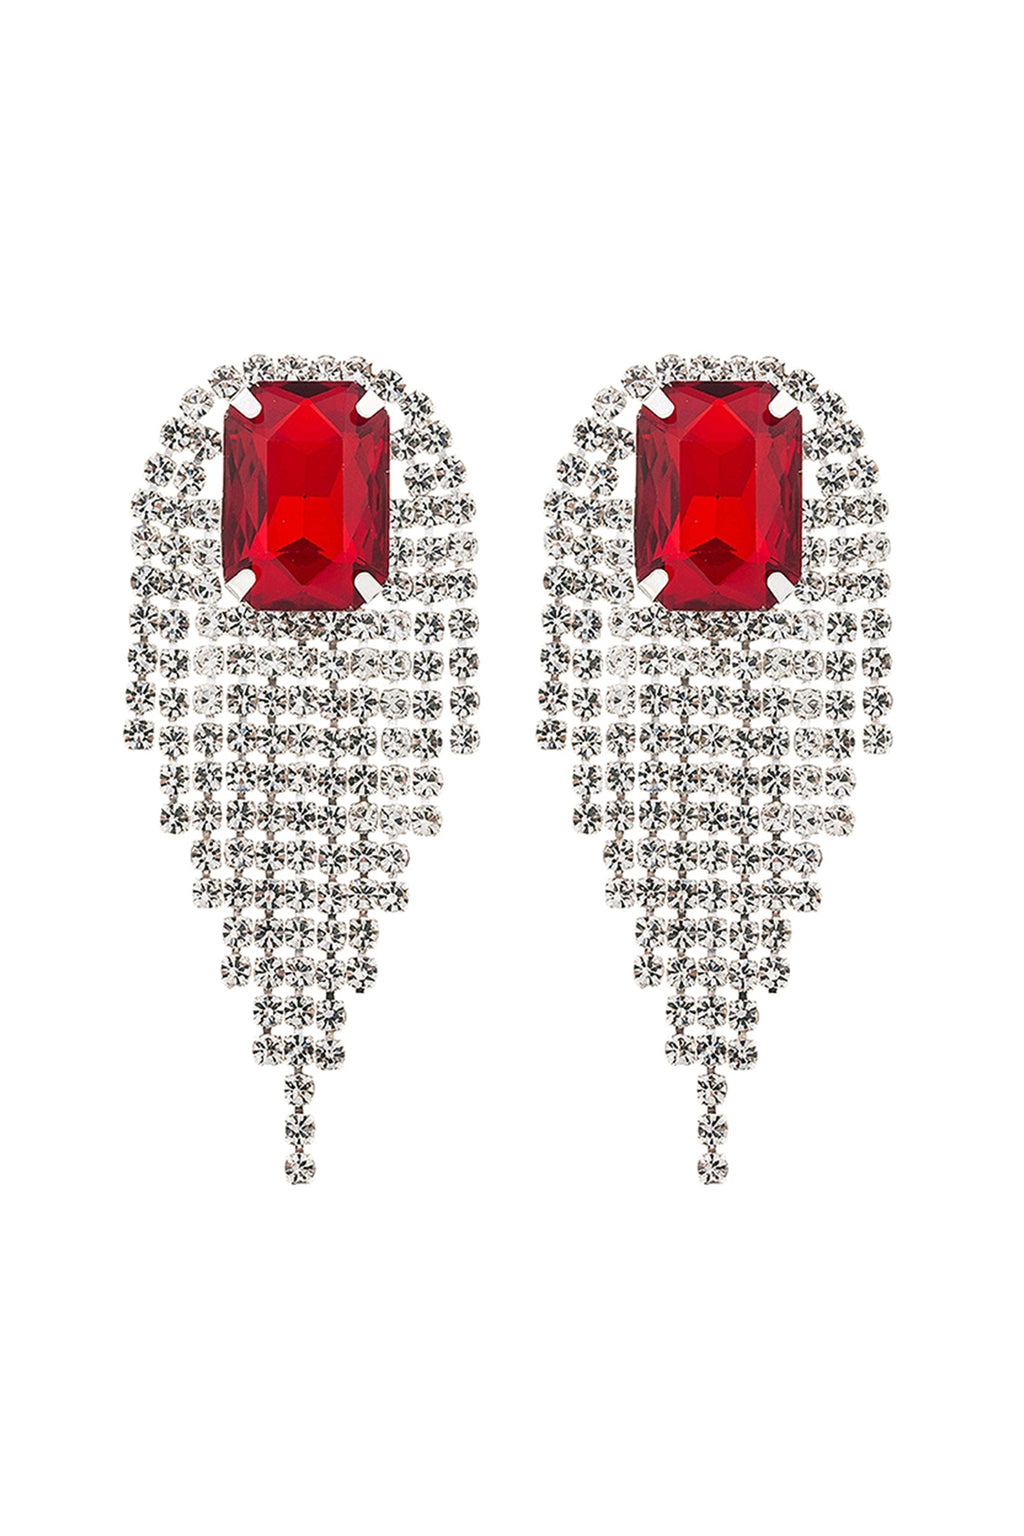 Rhinestone Square Fringe Tassel Earrings Red Silver - Pack of 6